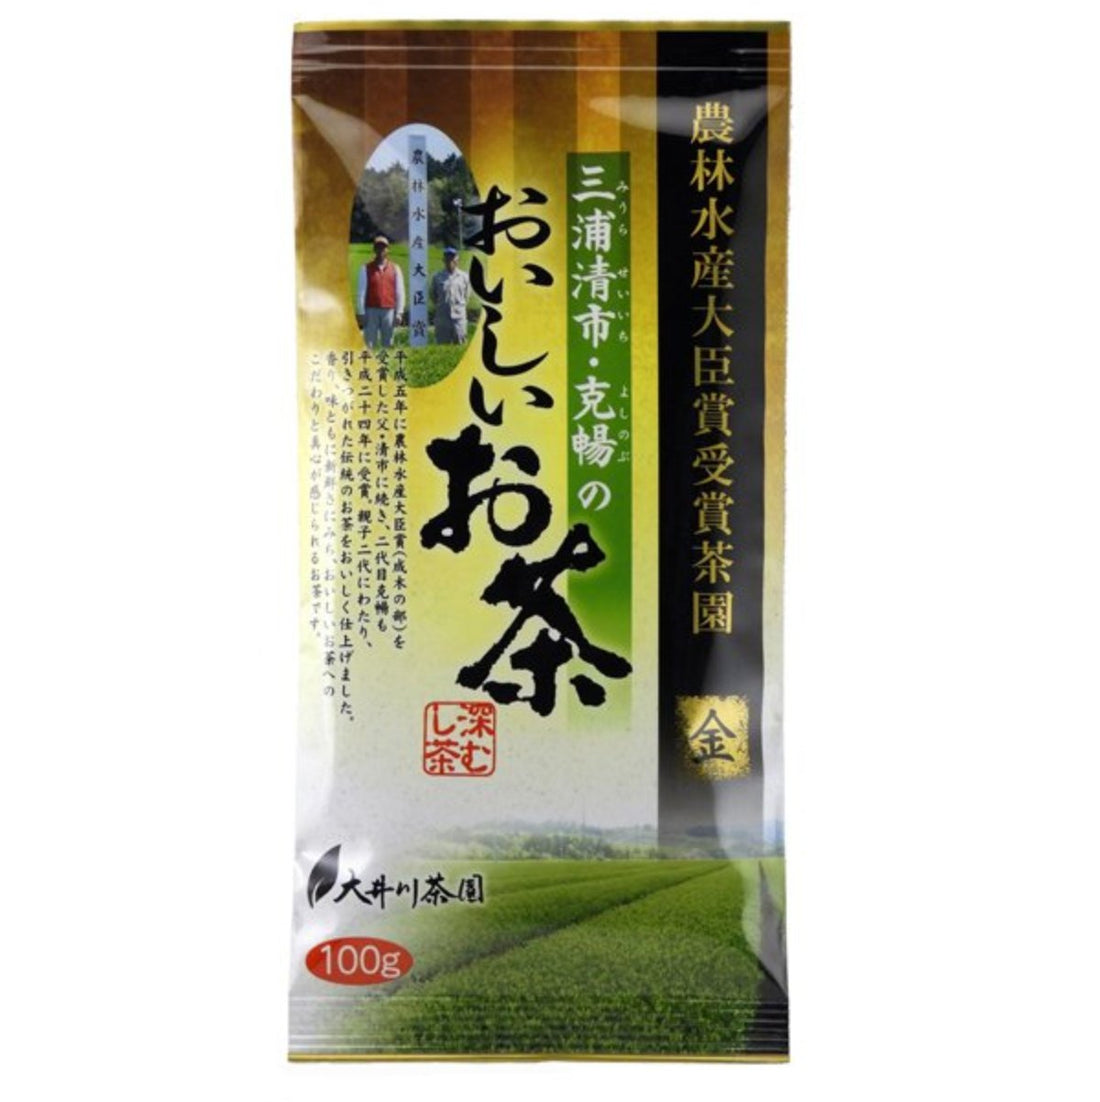 Oigawa Tea Garden won the Minister of Agriculture, Forestry and Fisheries Award. Delicious tea from Kiyoshi Miura Tea Farm and Katsunobu Kin 100g - NihonMura